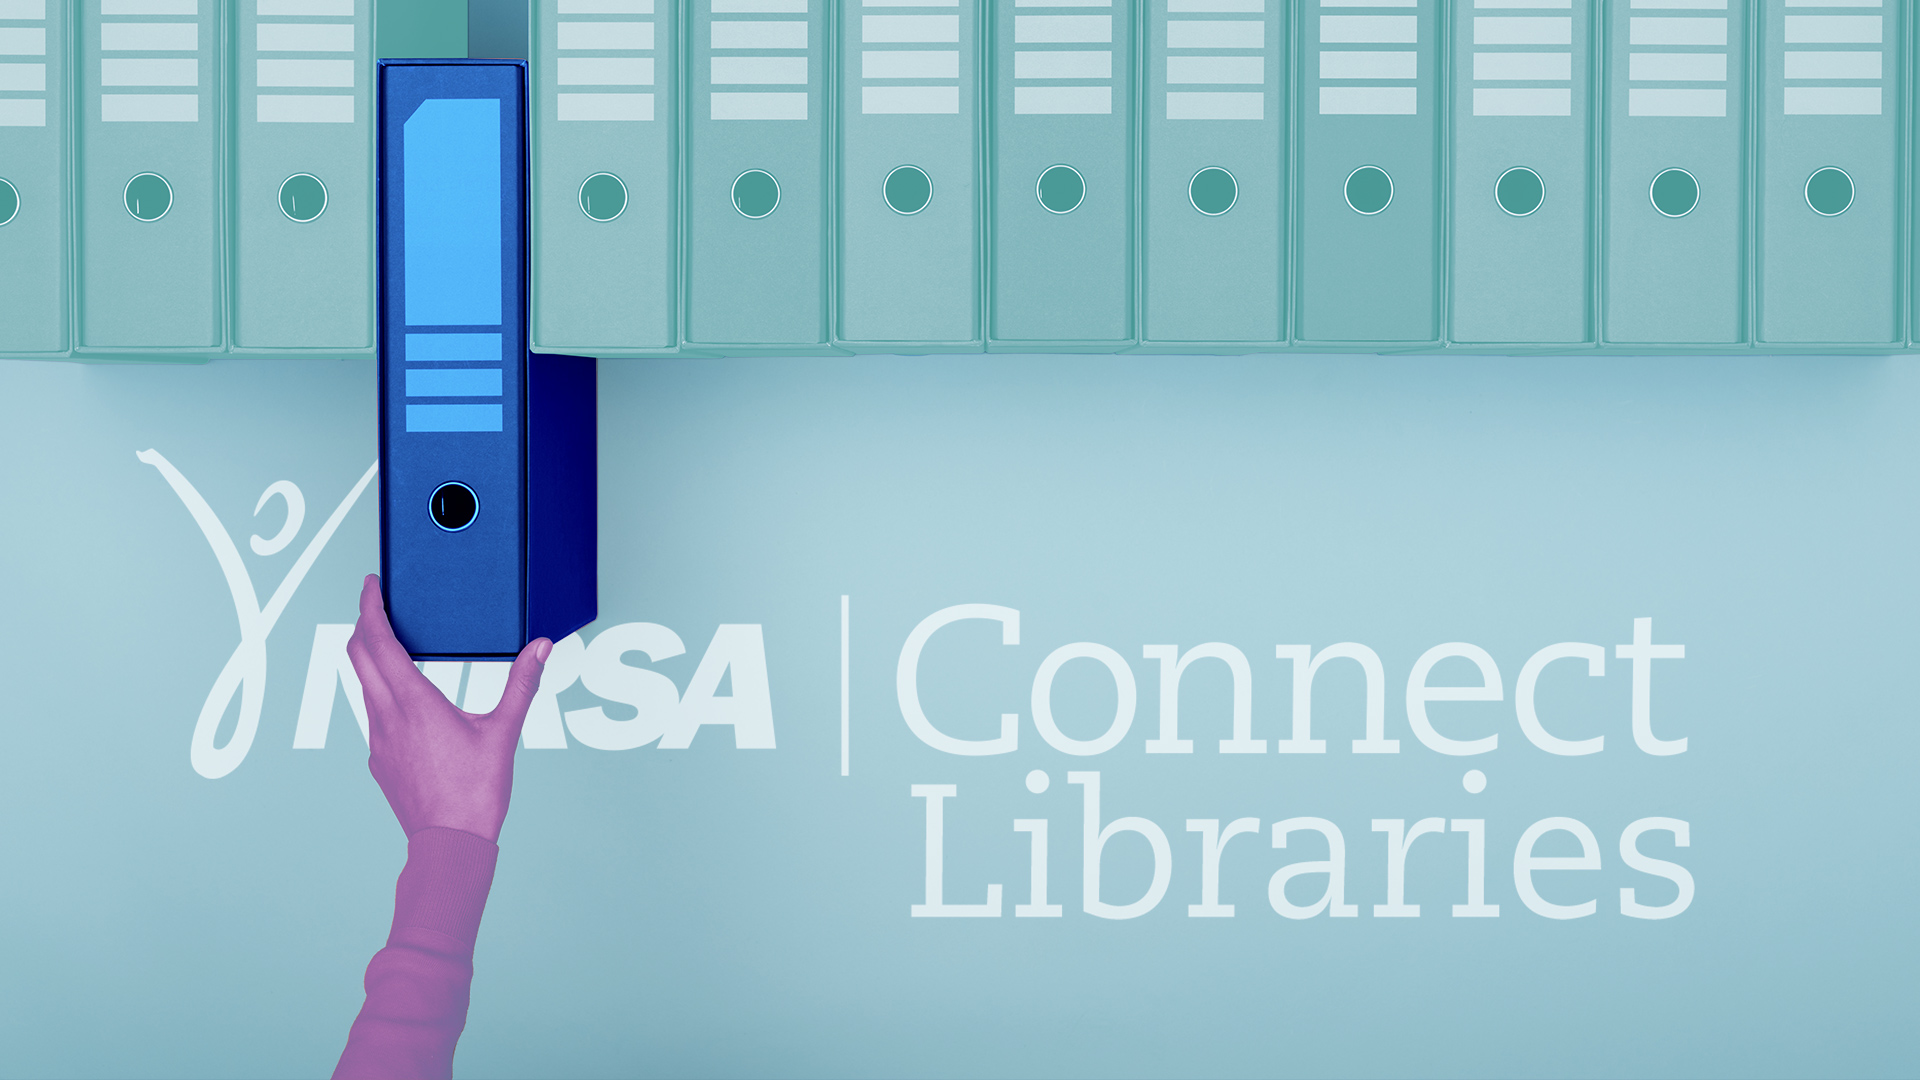 NIRSA Connect Libraries